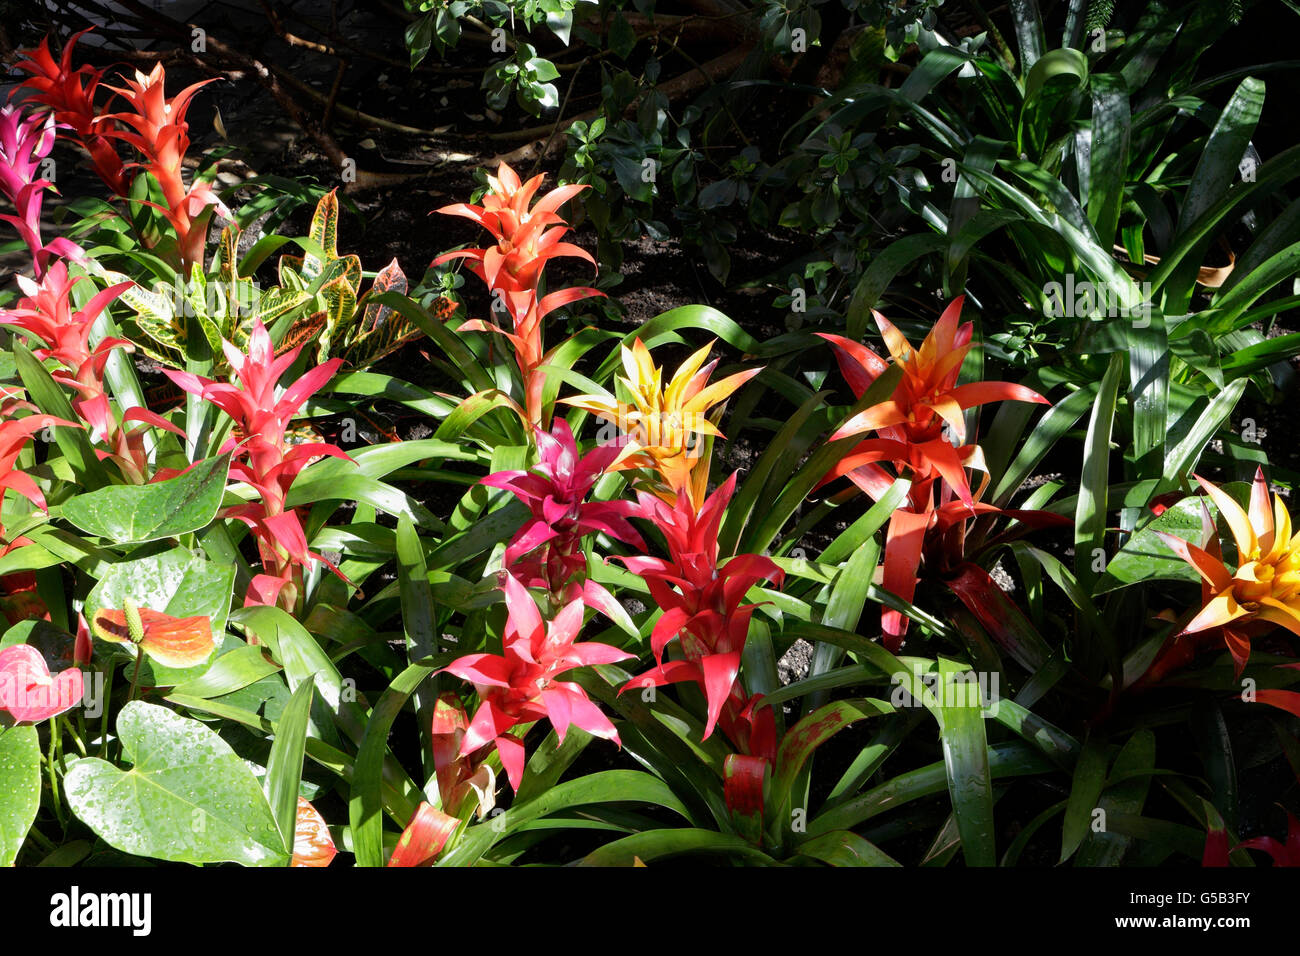 Bromeliad plants in Glasshouse Greenhouse Garden Stock Photo